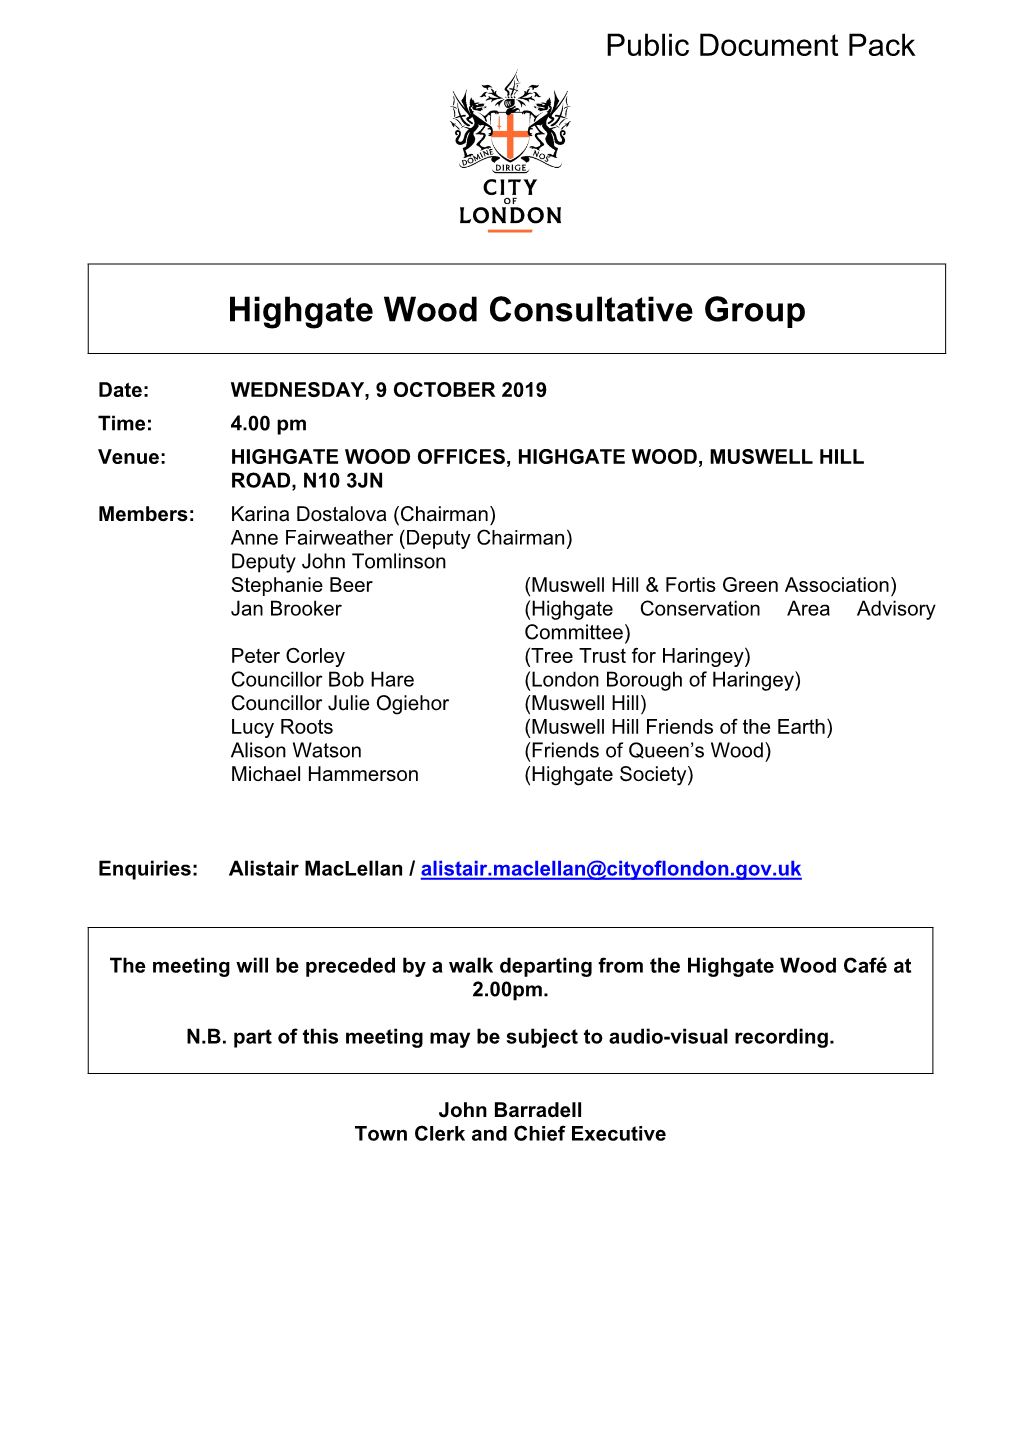 (Public Pack)Agenda Document for Highgate Wood Consultative Group